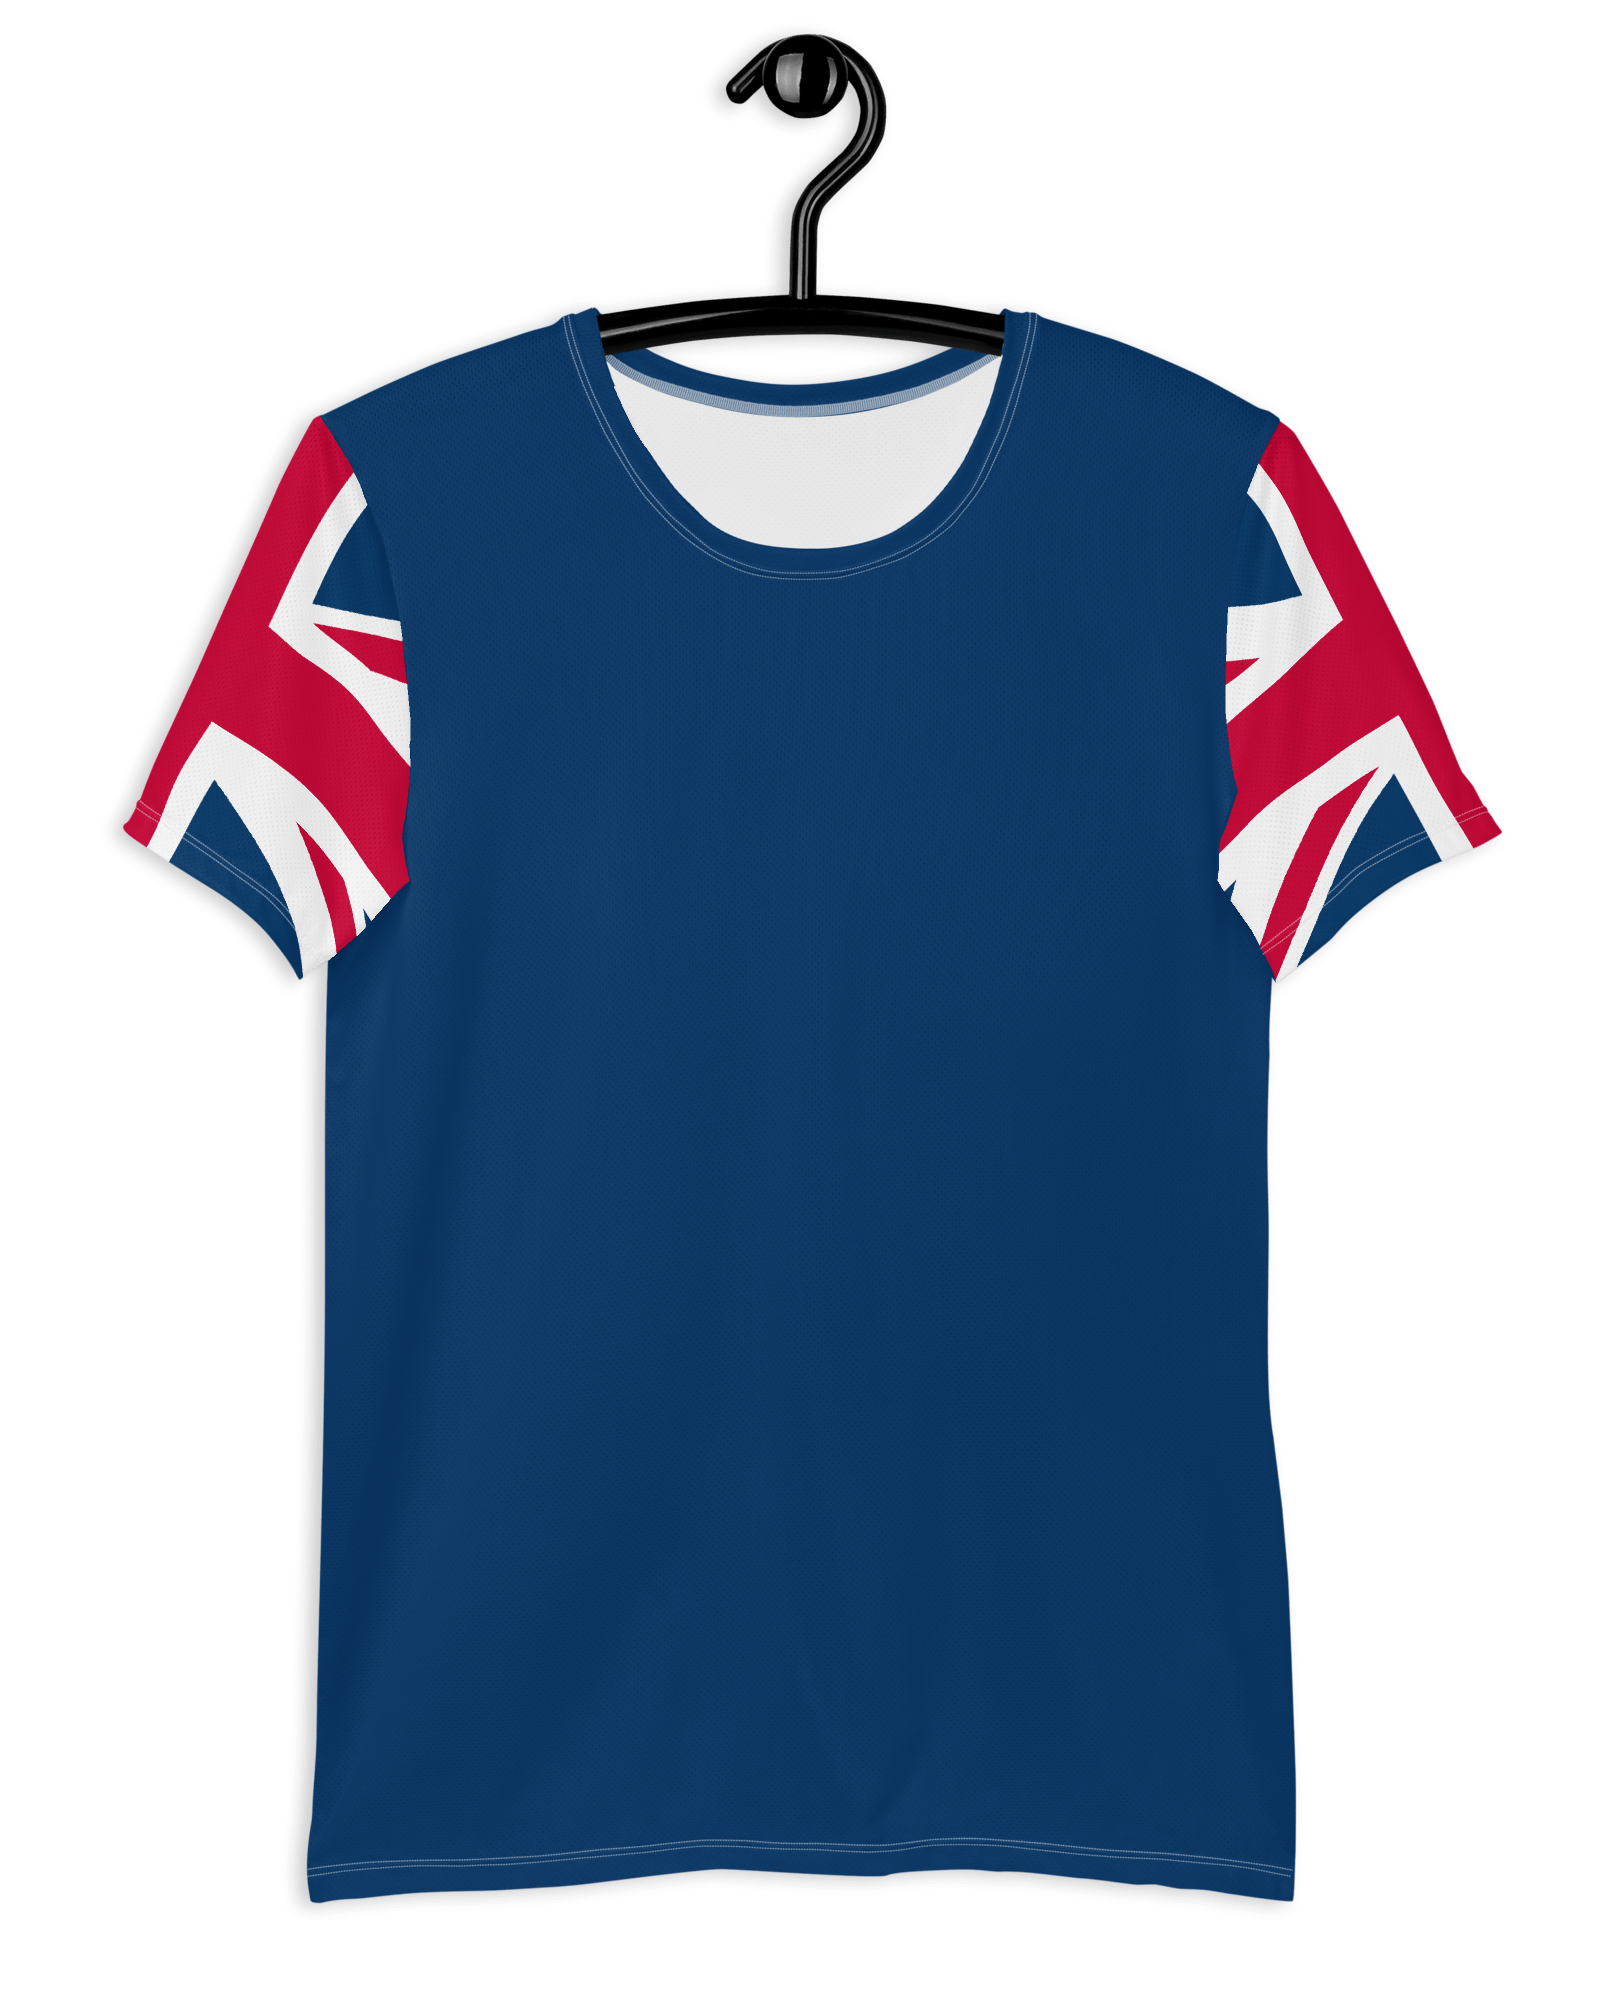 Union Jack Men's Workout Shirt XS Activewear Jolly & Goode